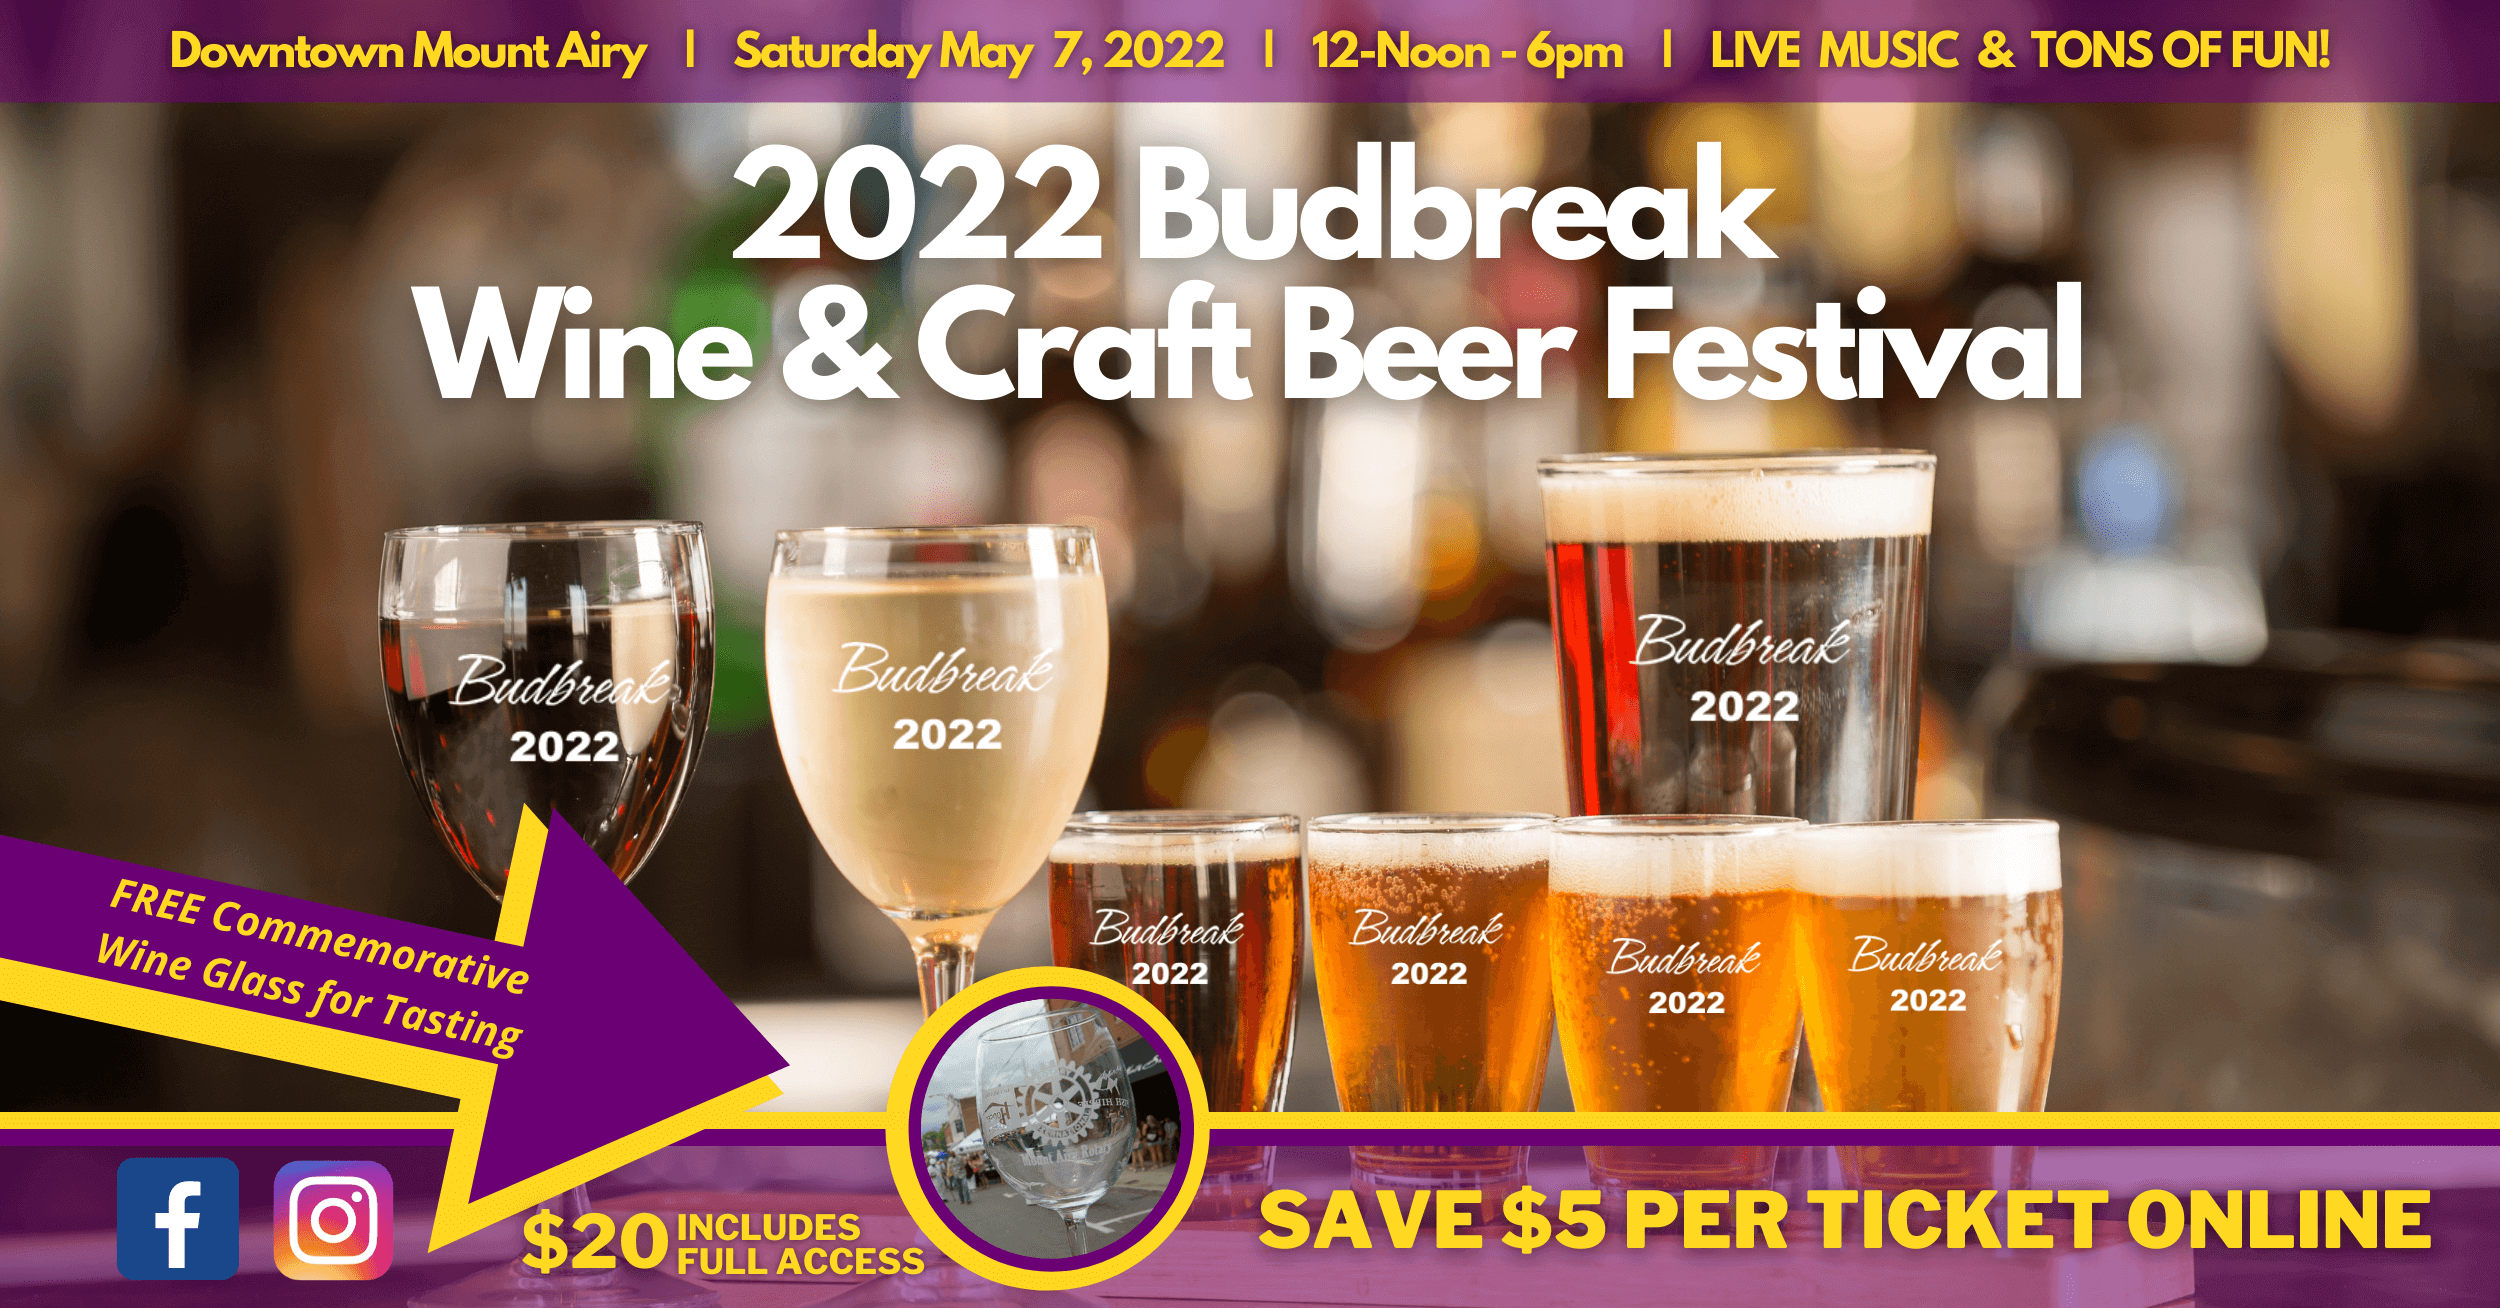 2017 Budbreak Wine and Craft Beer Festival